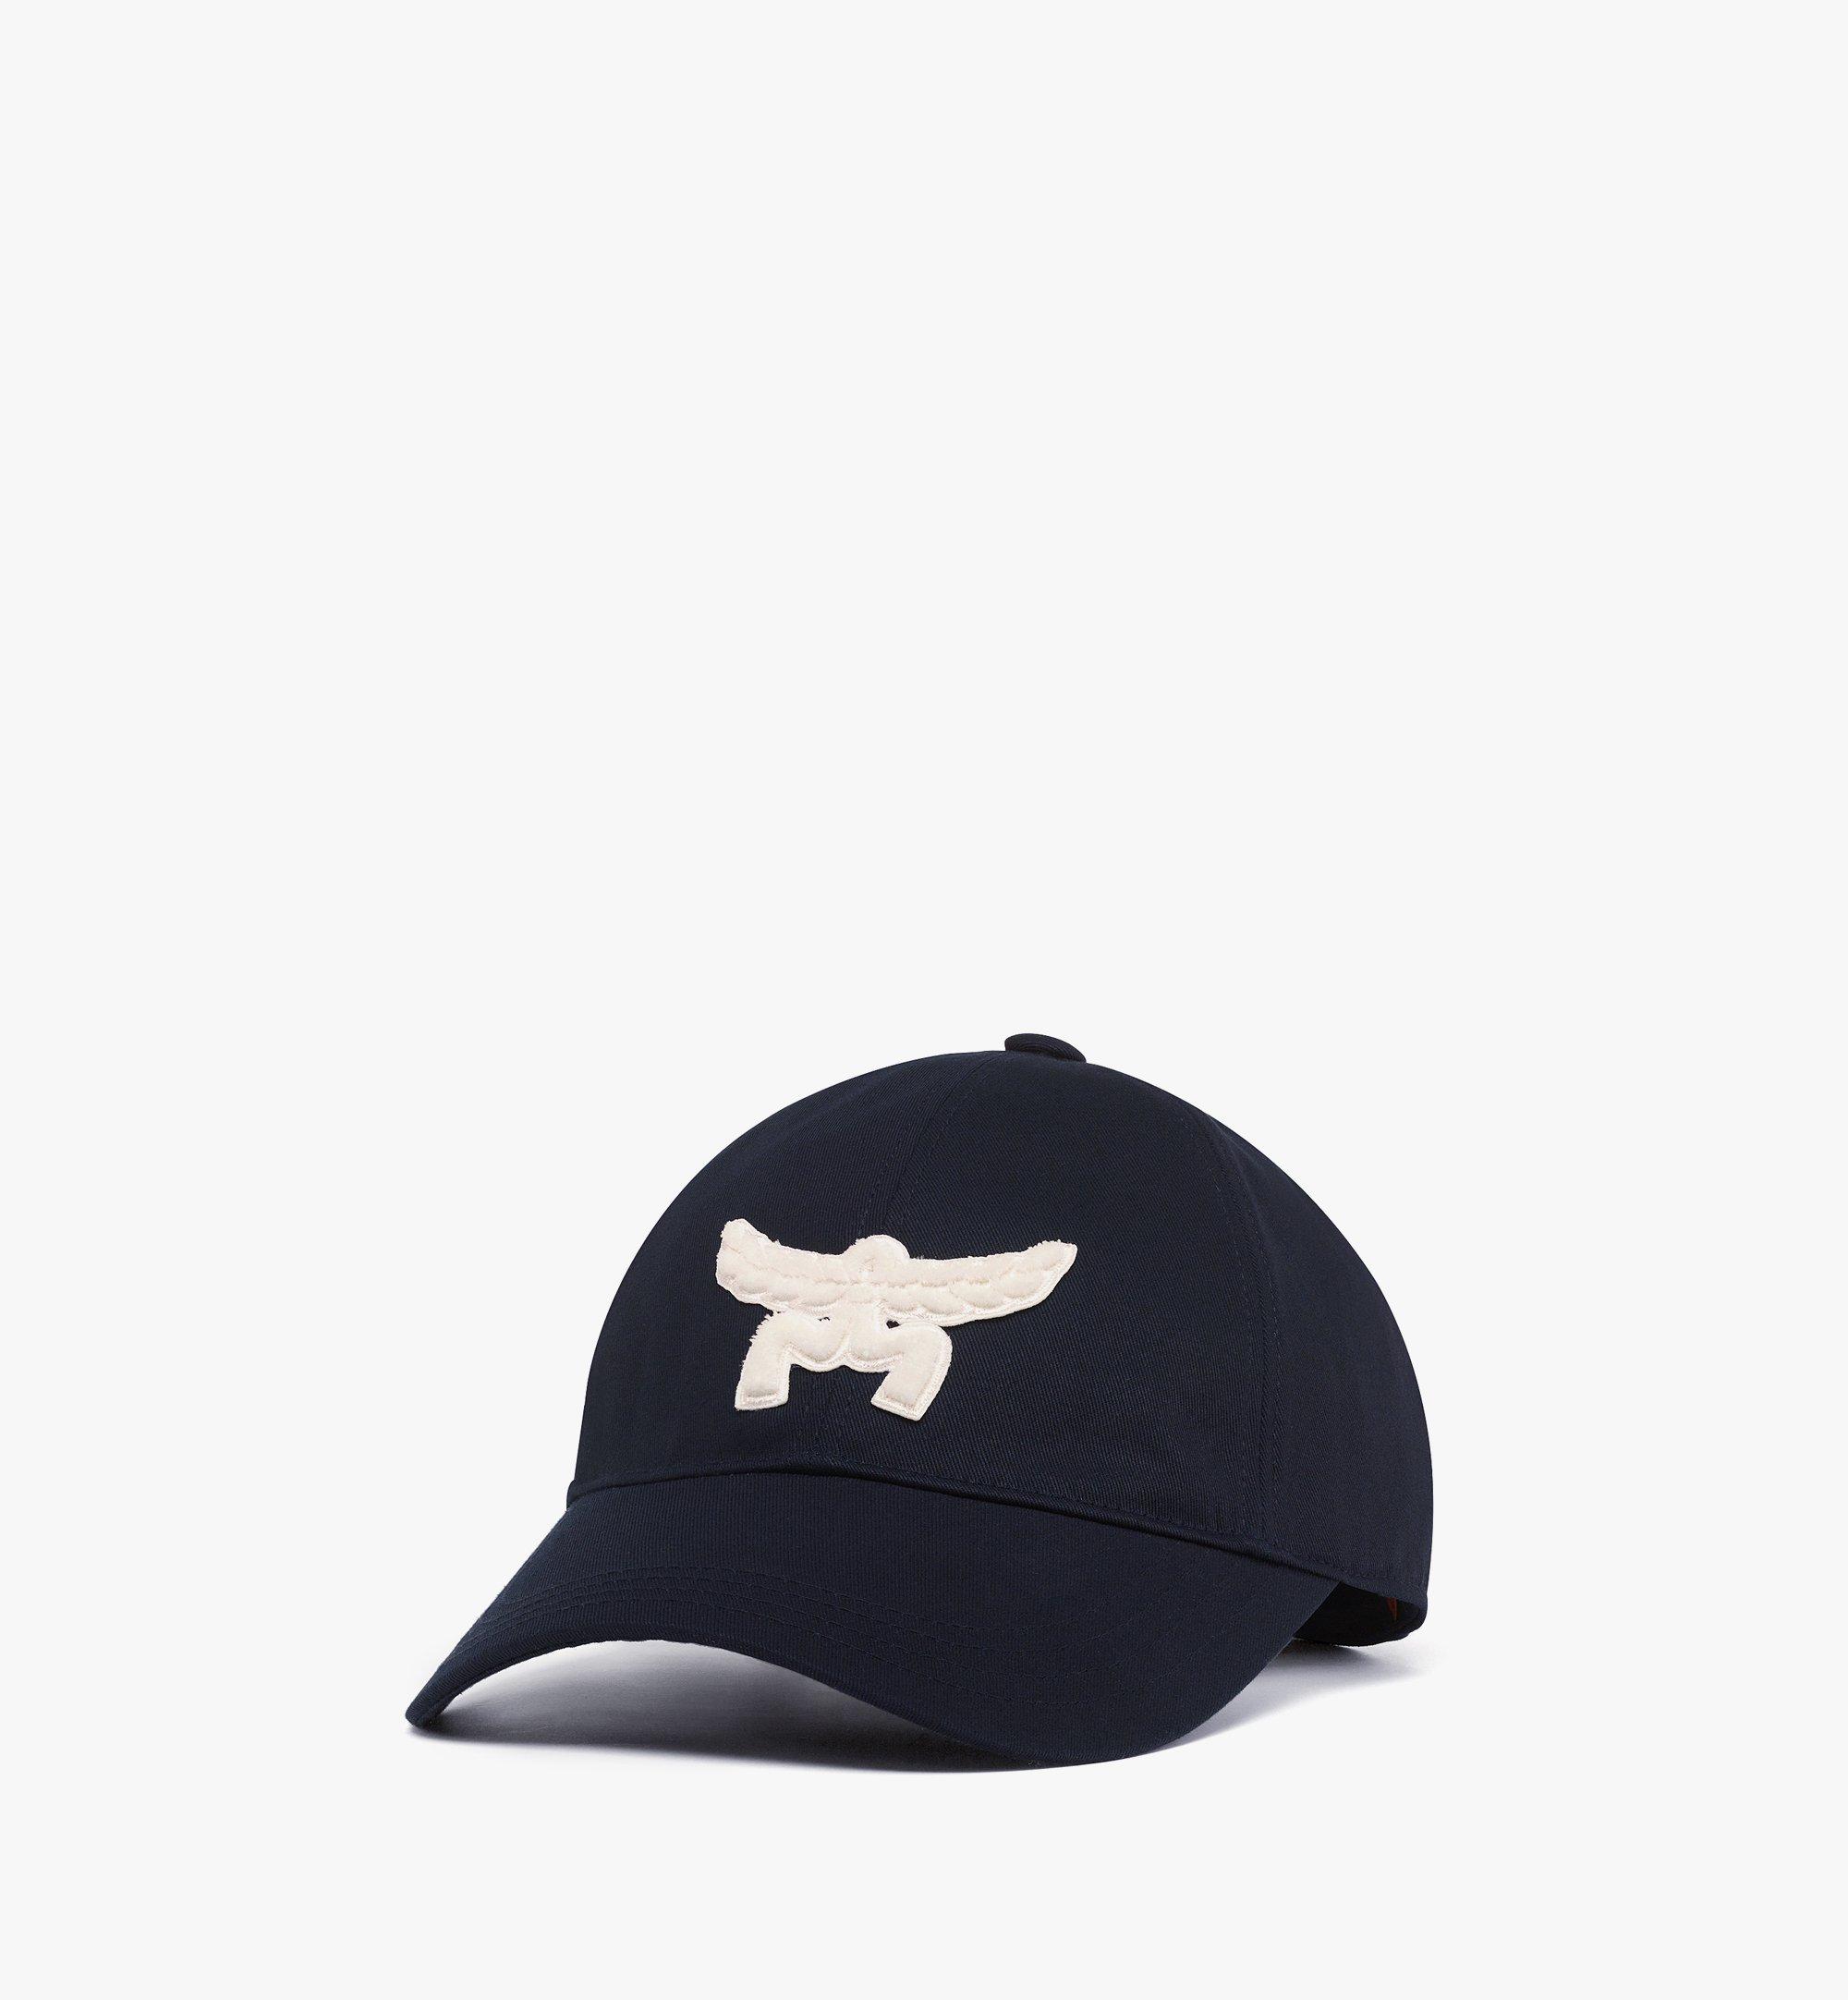 Men's Designer Hats